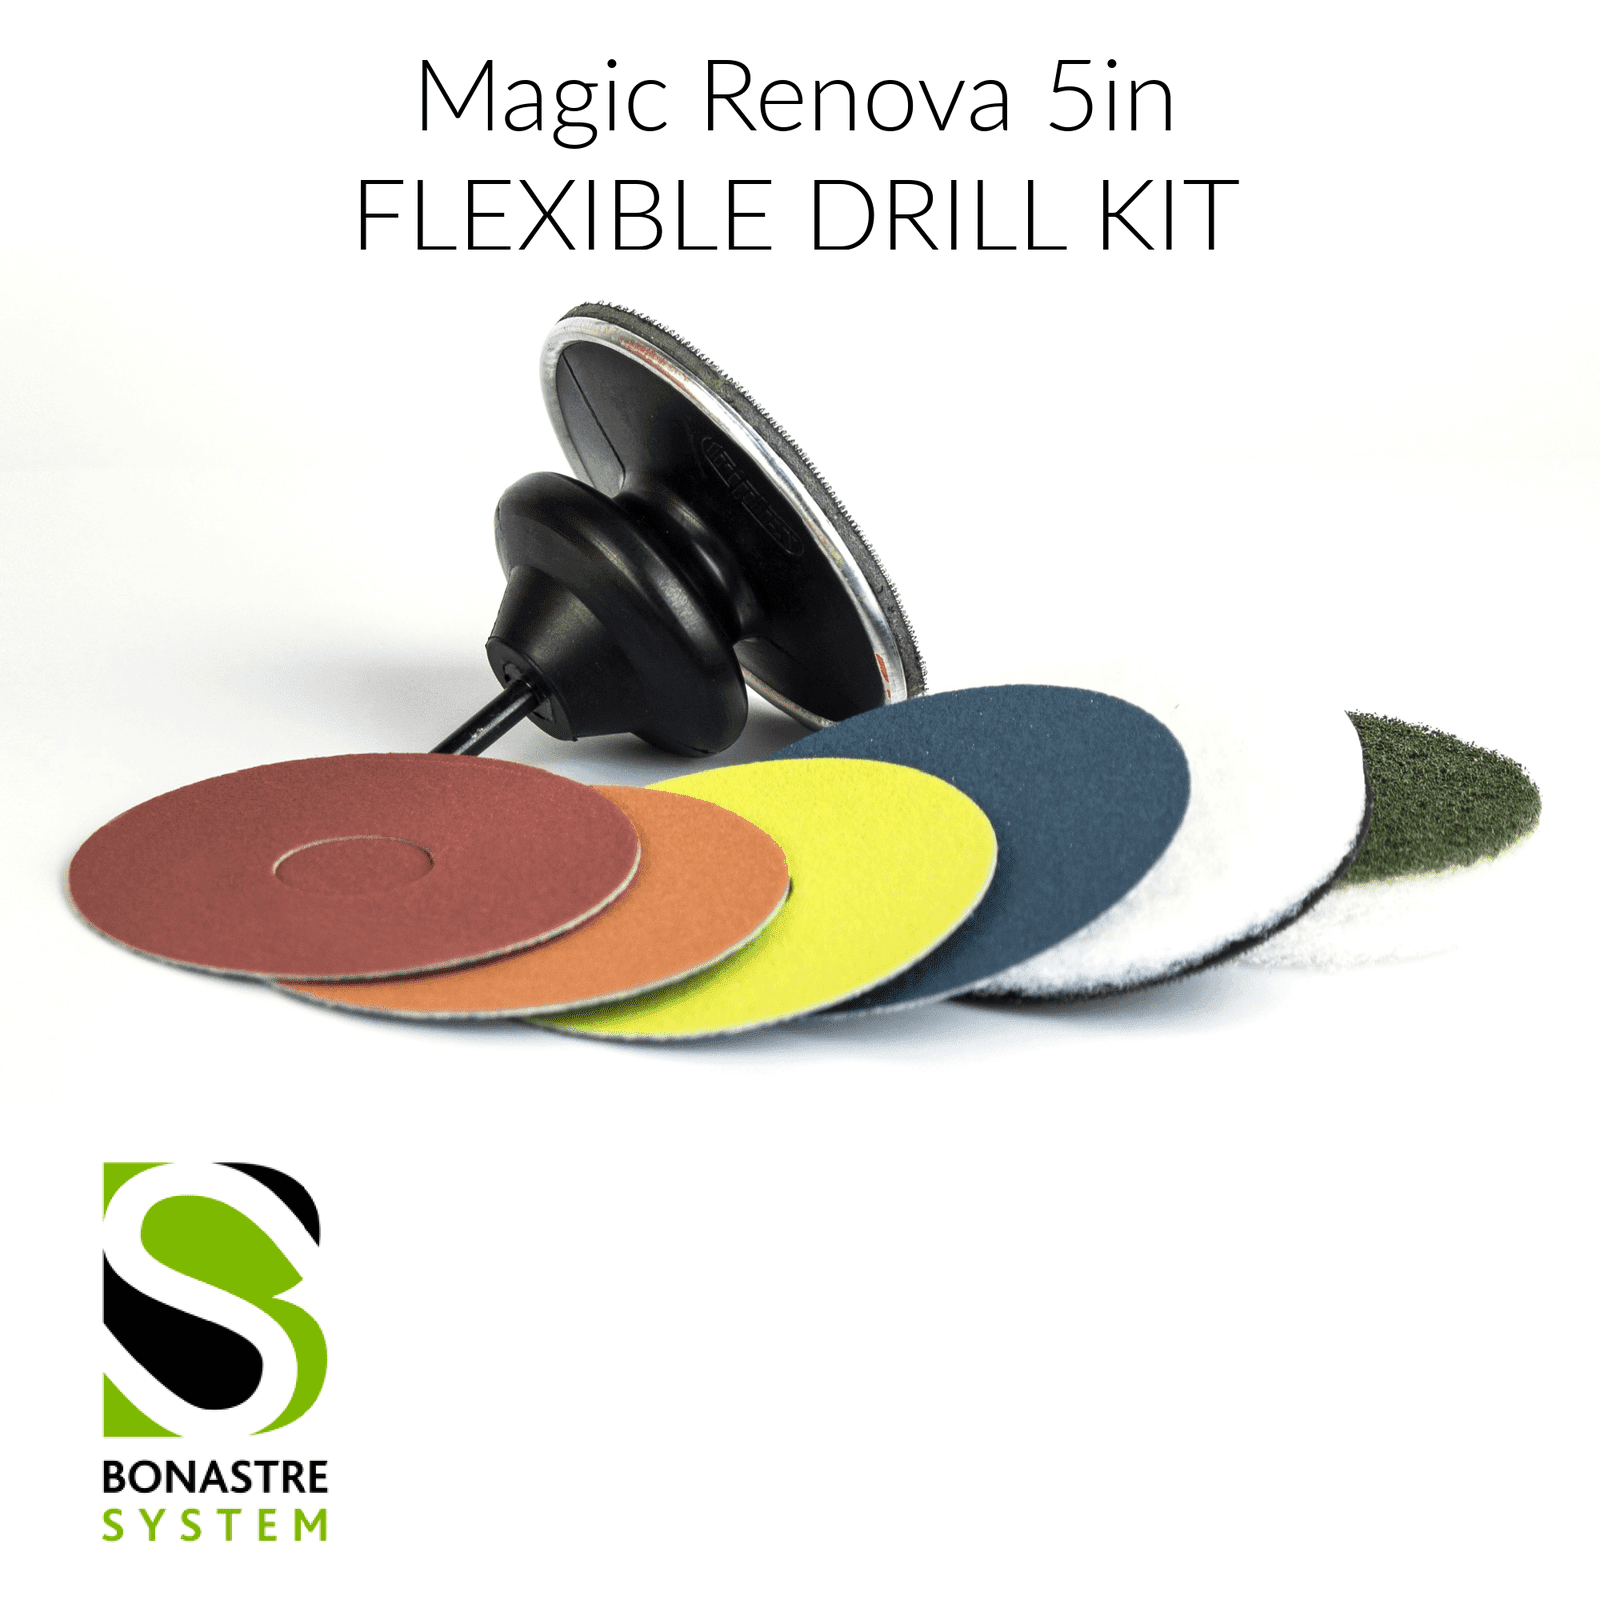 Stone Polishing Kit - 5 Magic Renova Kit for countertops and small areas